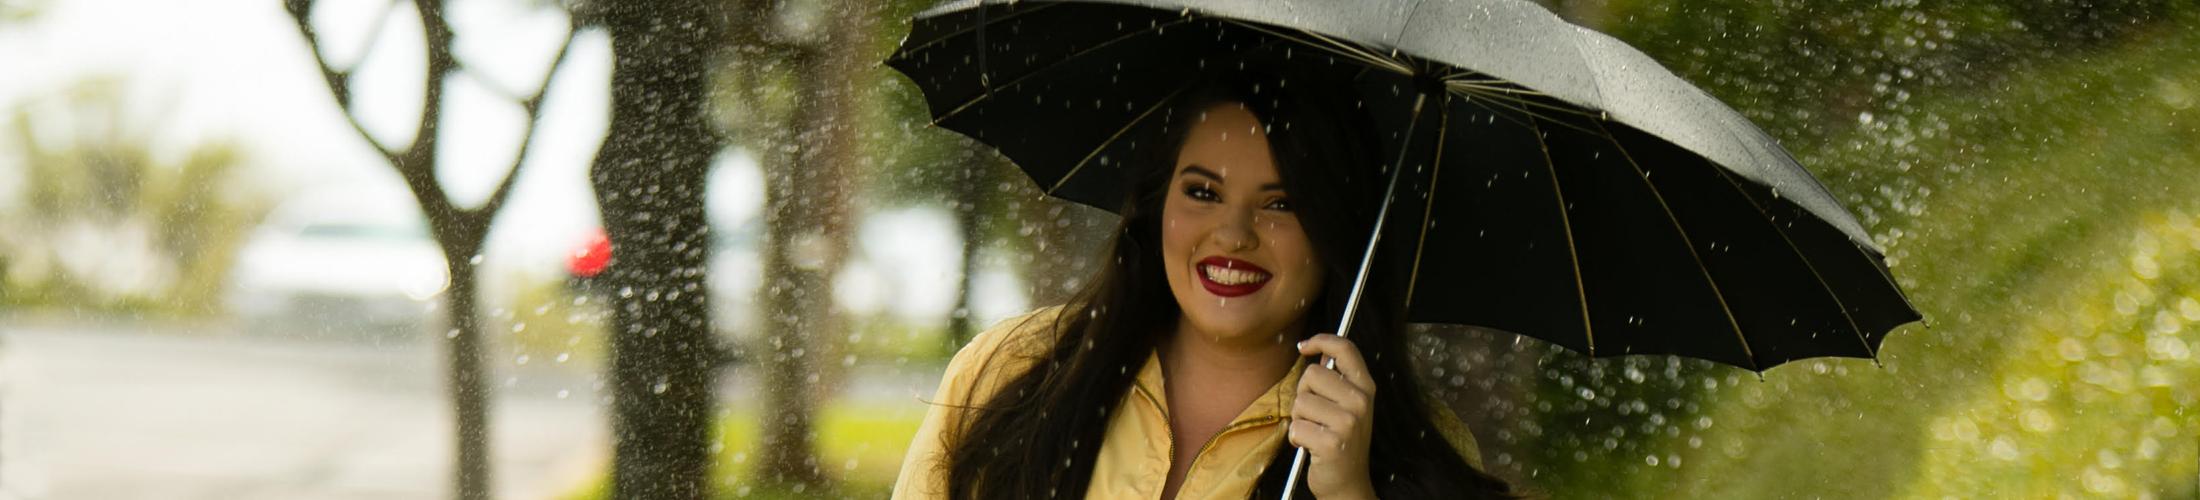 student holding umbrella in the rain